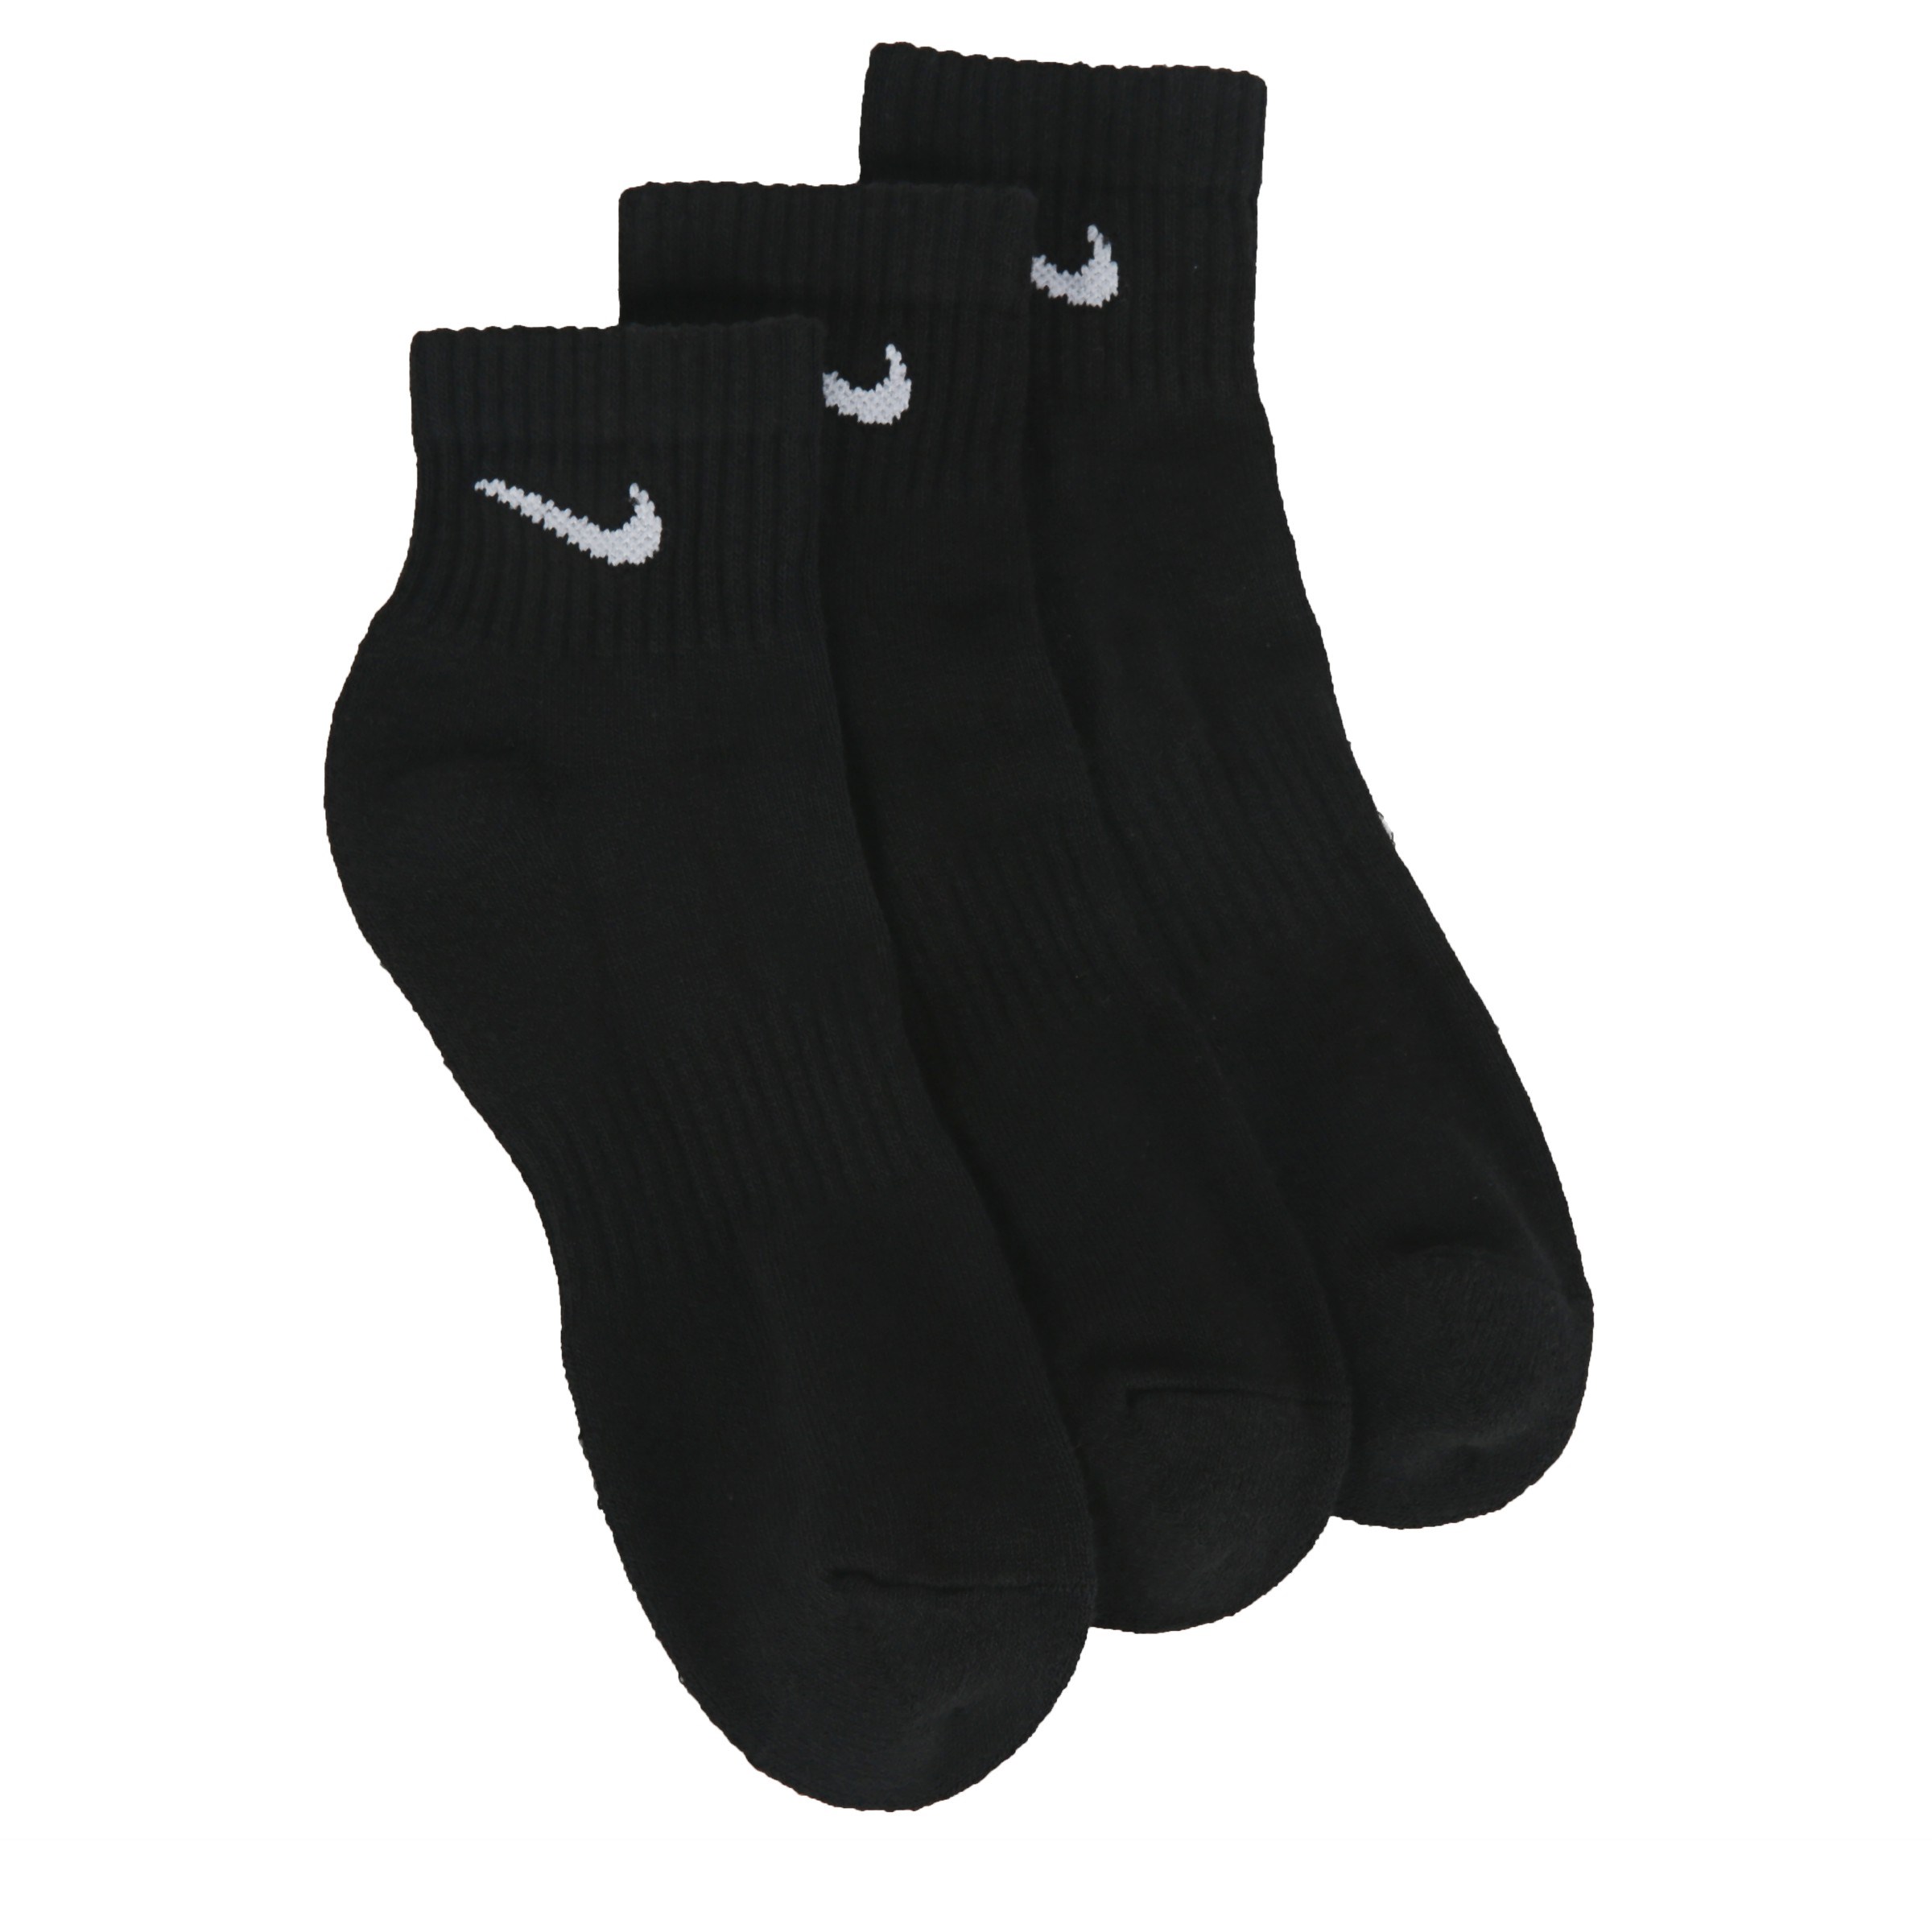 Men's 3 Pack Large Everyday Cushion Ankle Socks